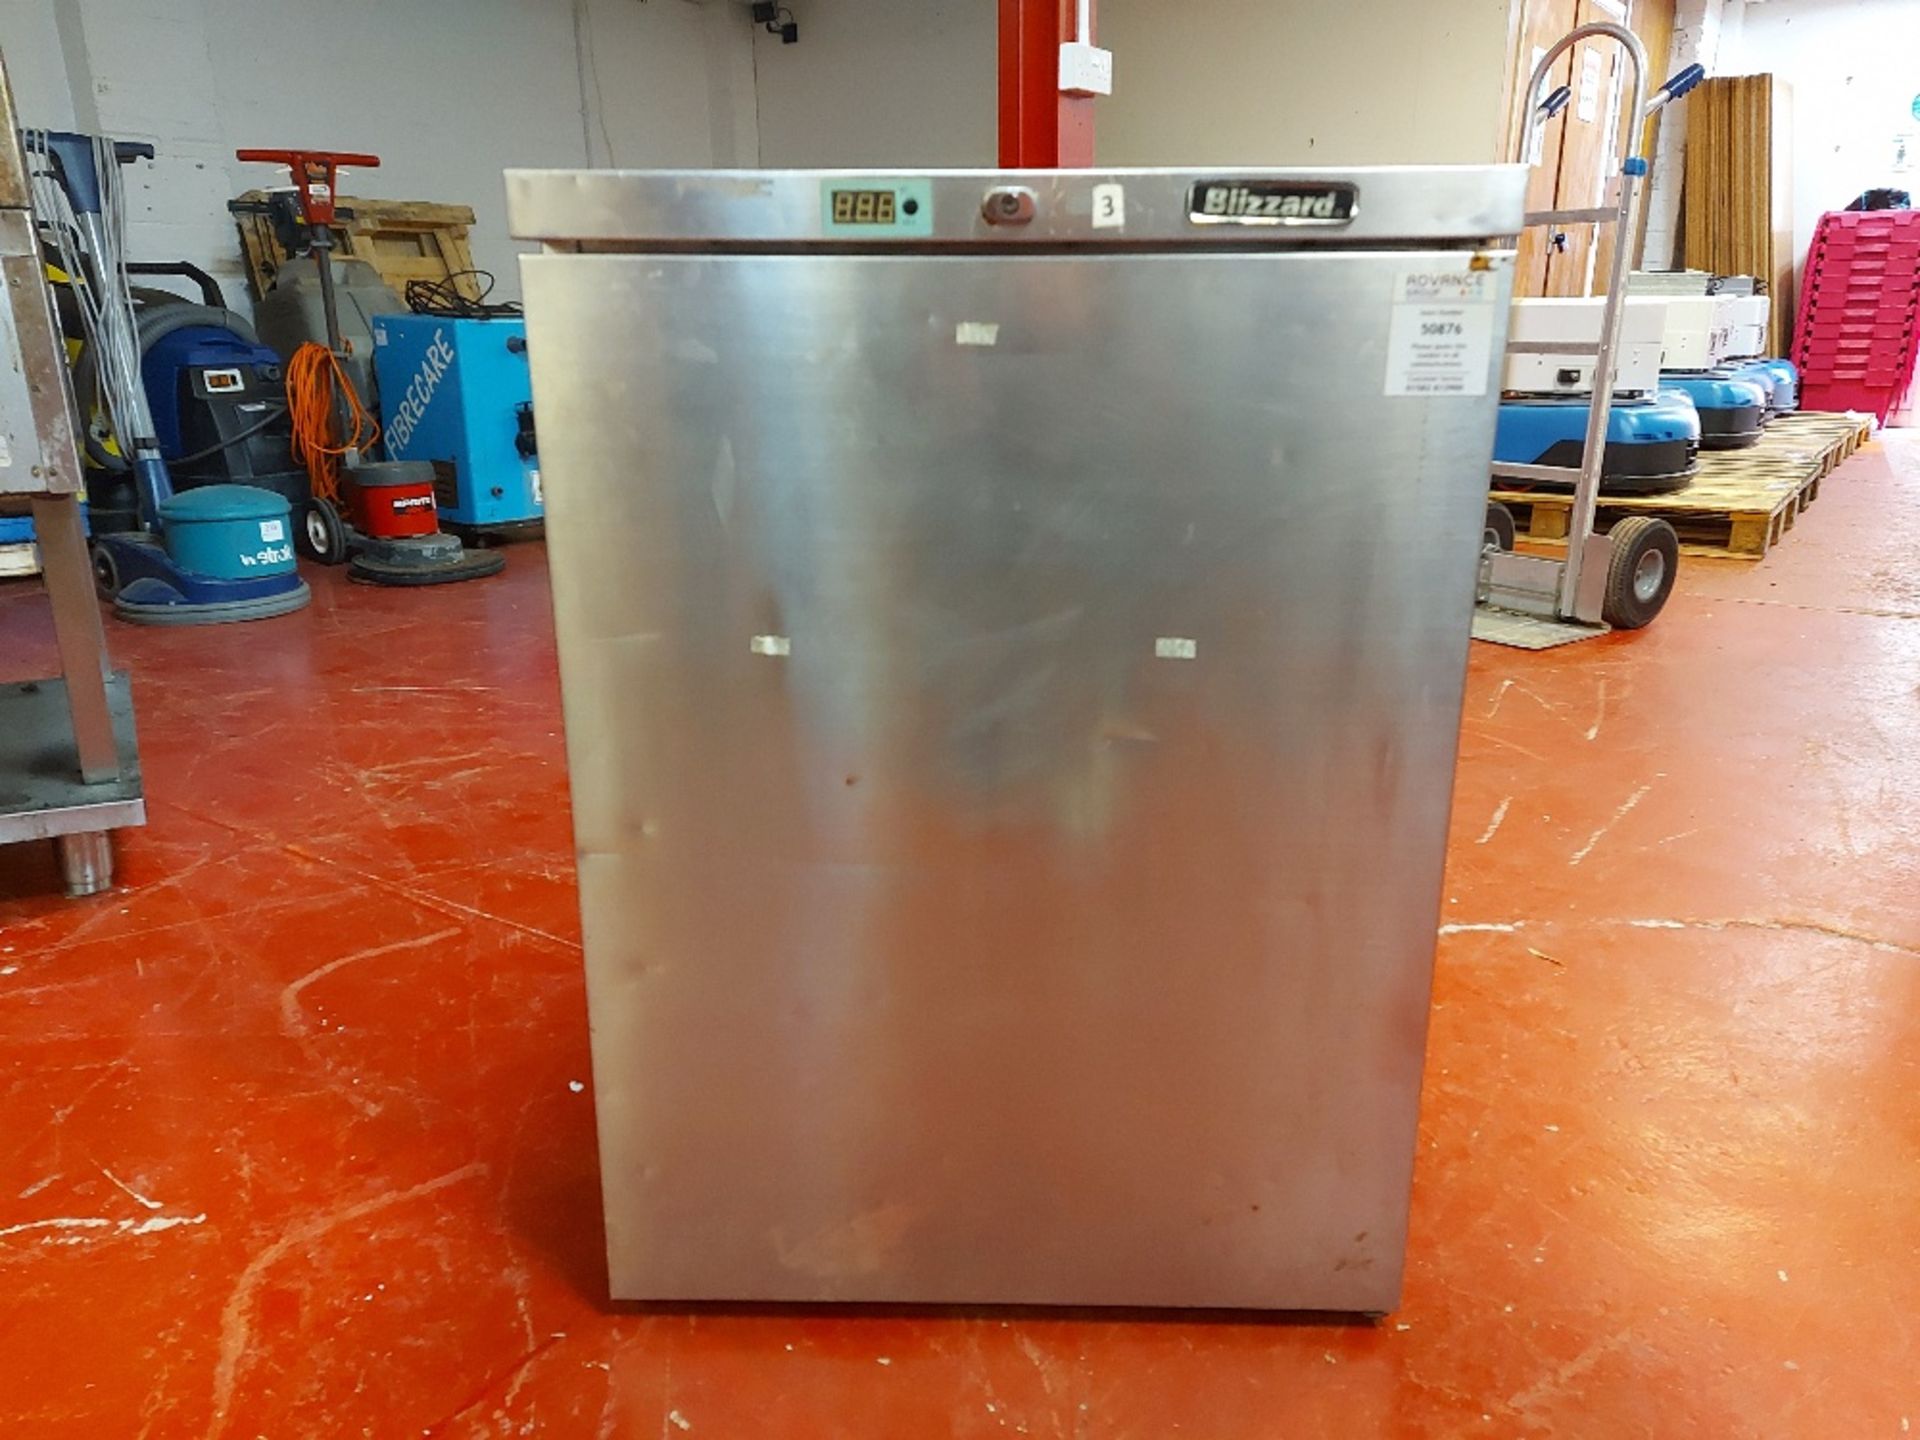 Blizzard UCR05 stainless steel single door under counter refrigerator